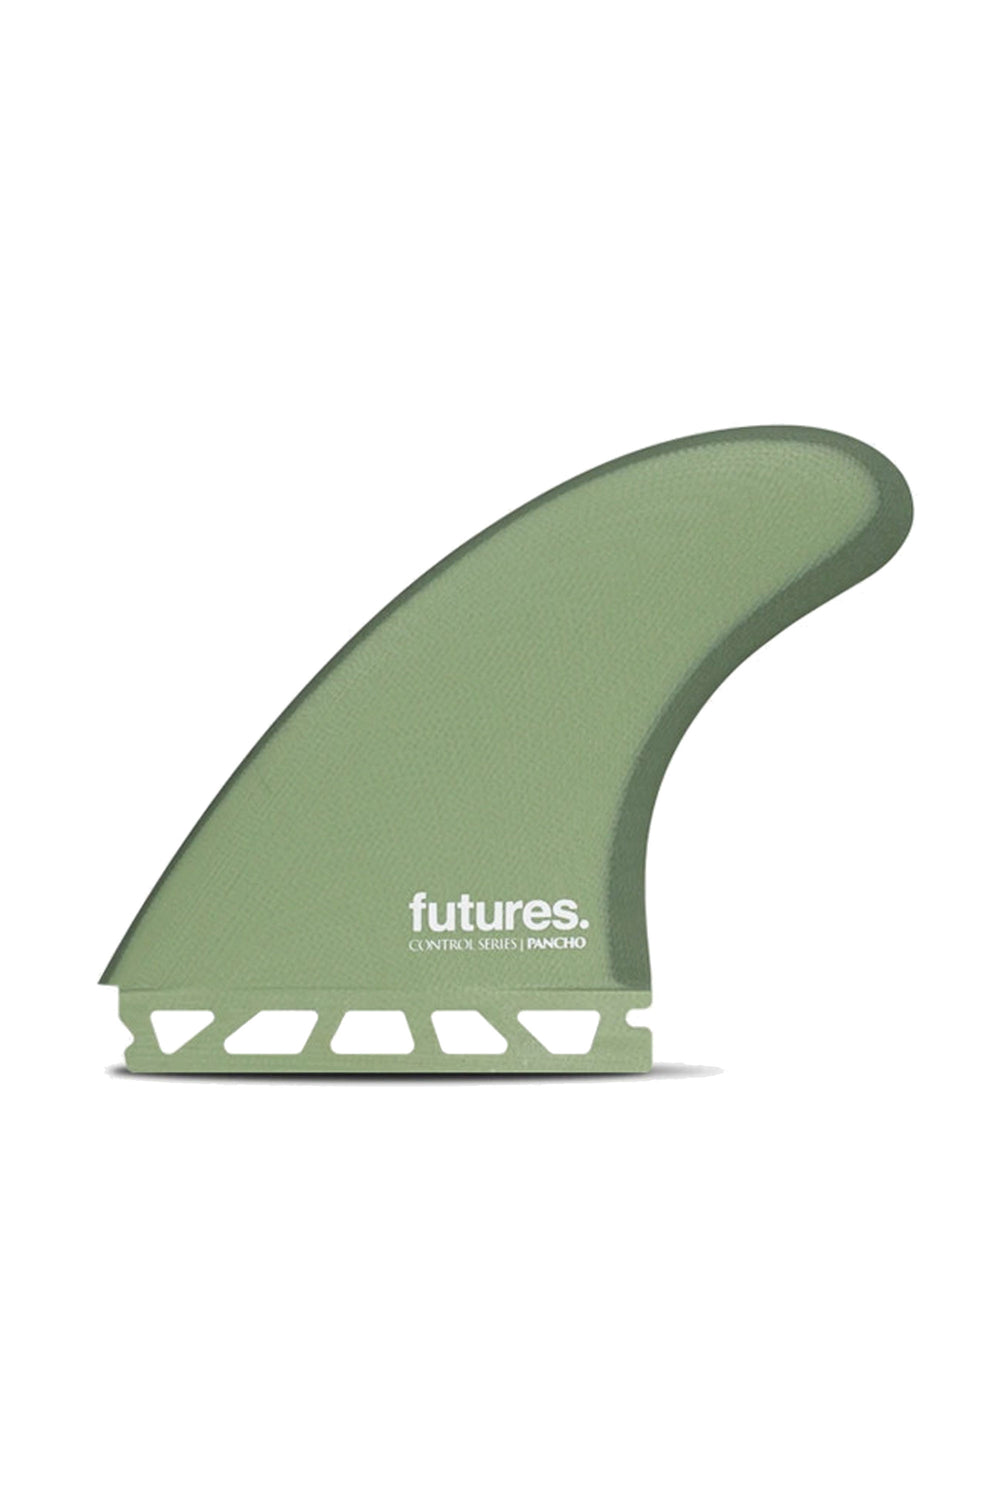 Pukas-Surf-Shop-Futures-Pancho-fiberglass-l-3fins-green